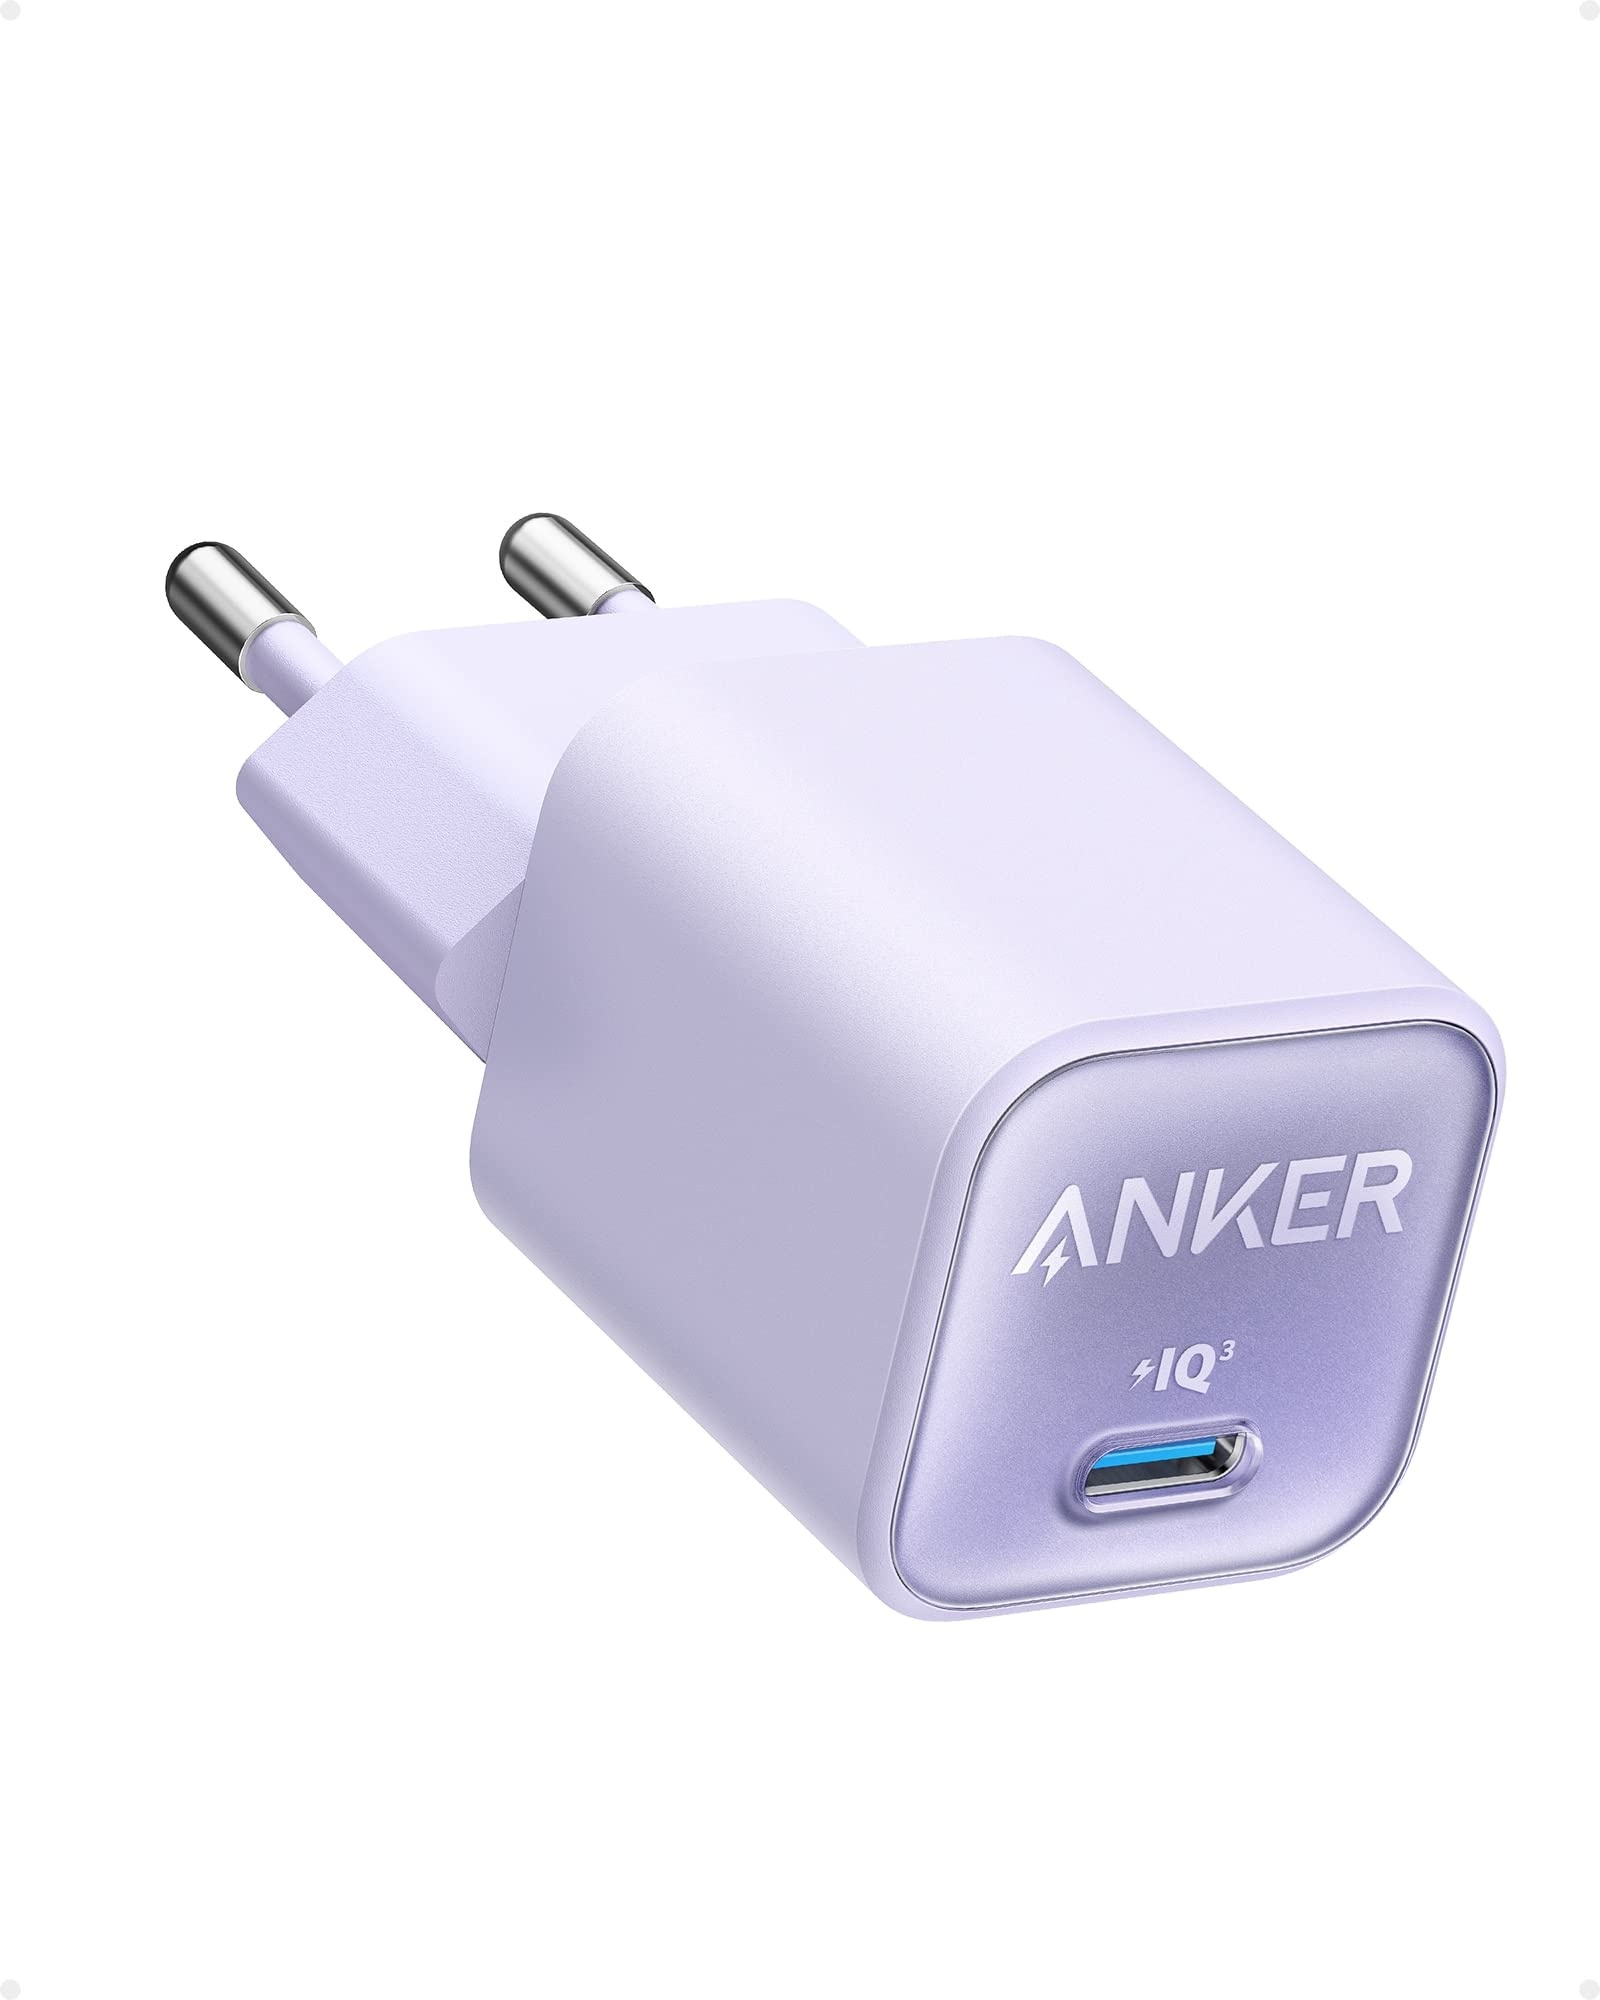 Anker USB C GaN Charger 30W, 511 Ladegerät (Nano 3), PIQ 3.0 PPS Schnellladegerät, Kompatibel mit iPhone 15/15 Pro/15 Pro Max/14 Pro/14 Pro Max, Galaxy, Pixel 4/3, iPad (Ohne Ladekabel)